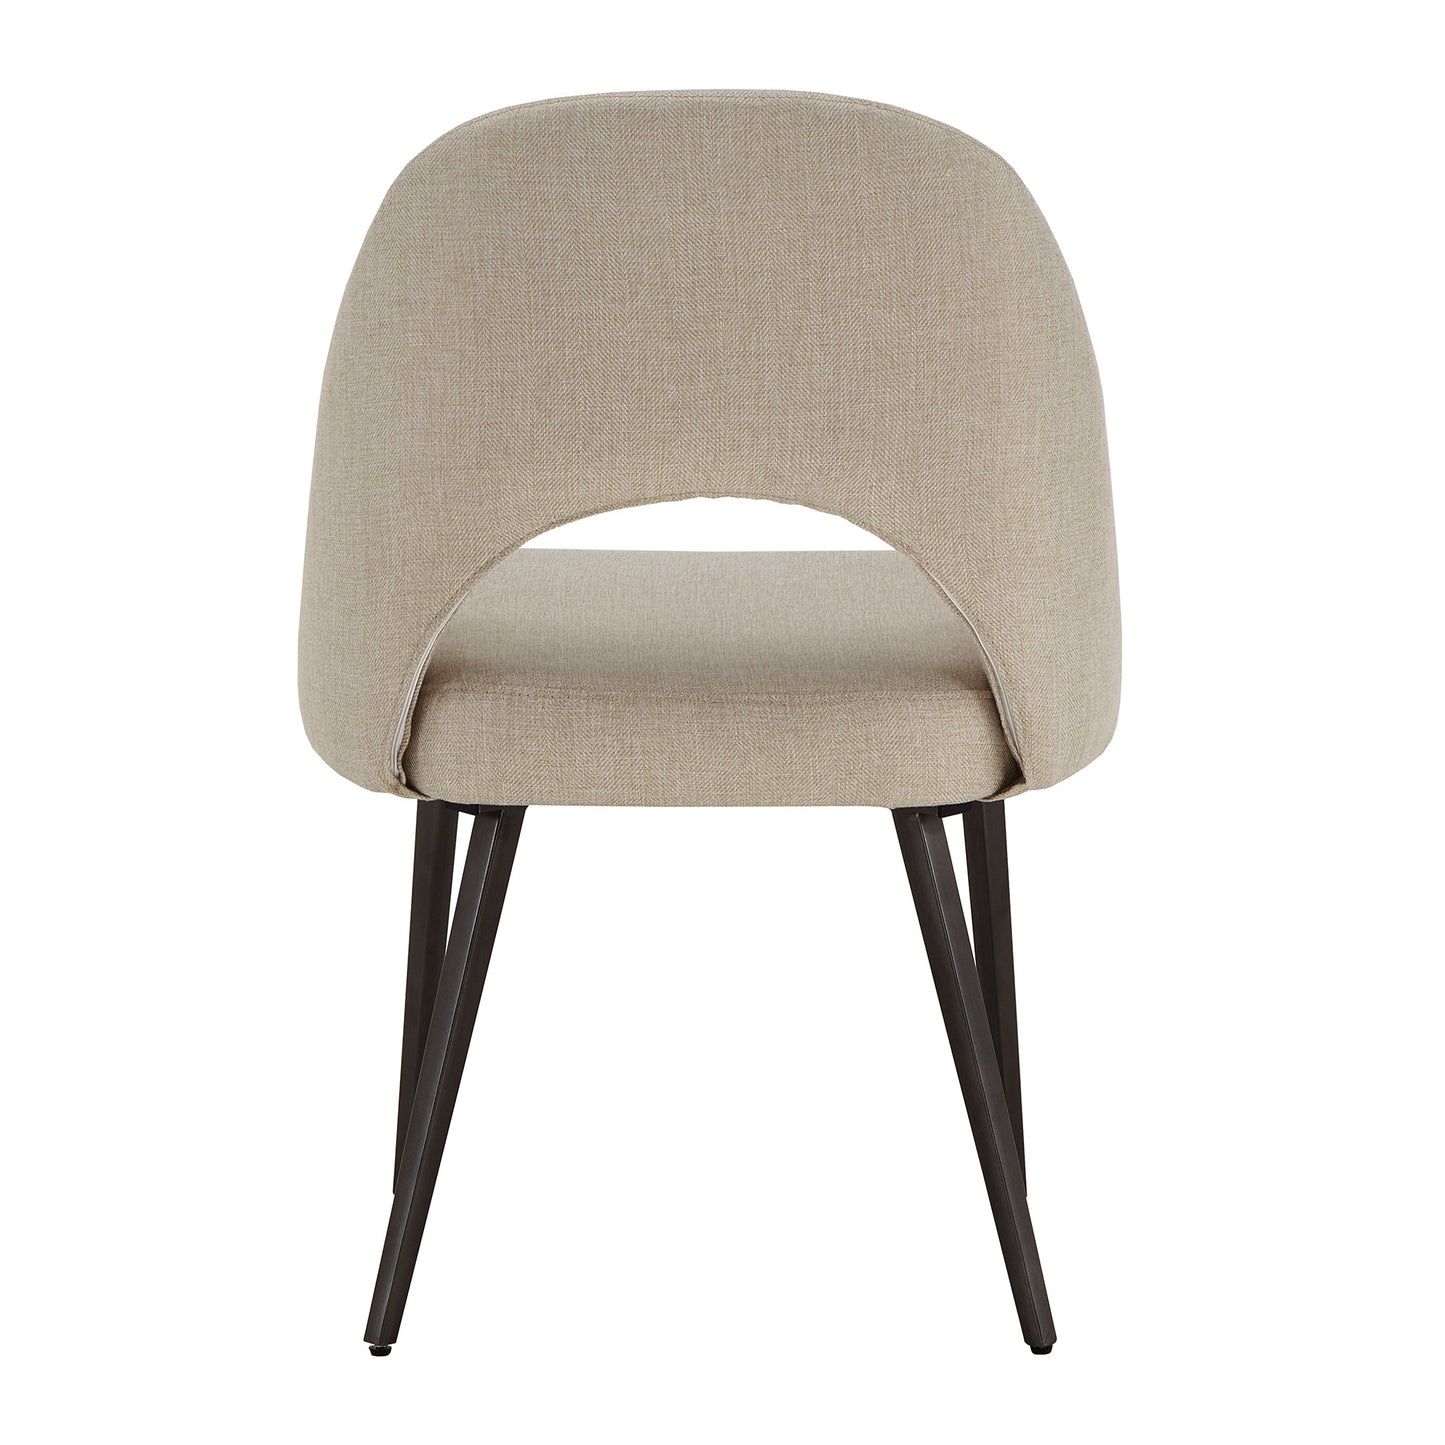 Upholstered Dining Chairs (Set of 2) - Beige Herringbone Fabric